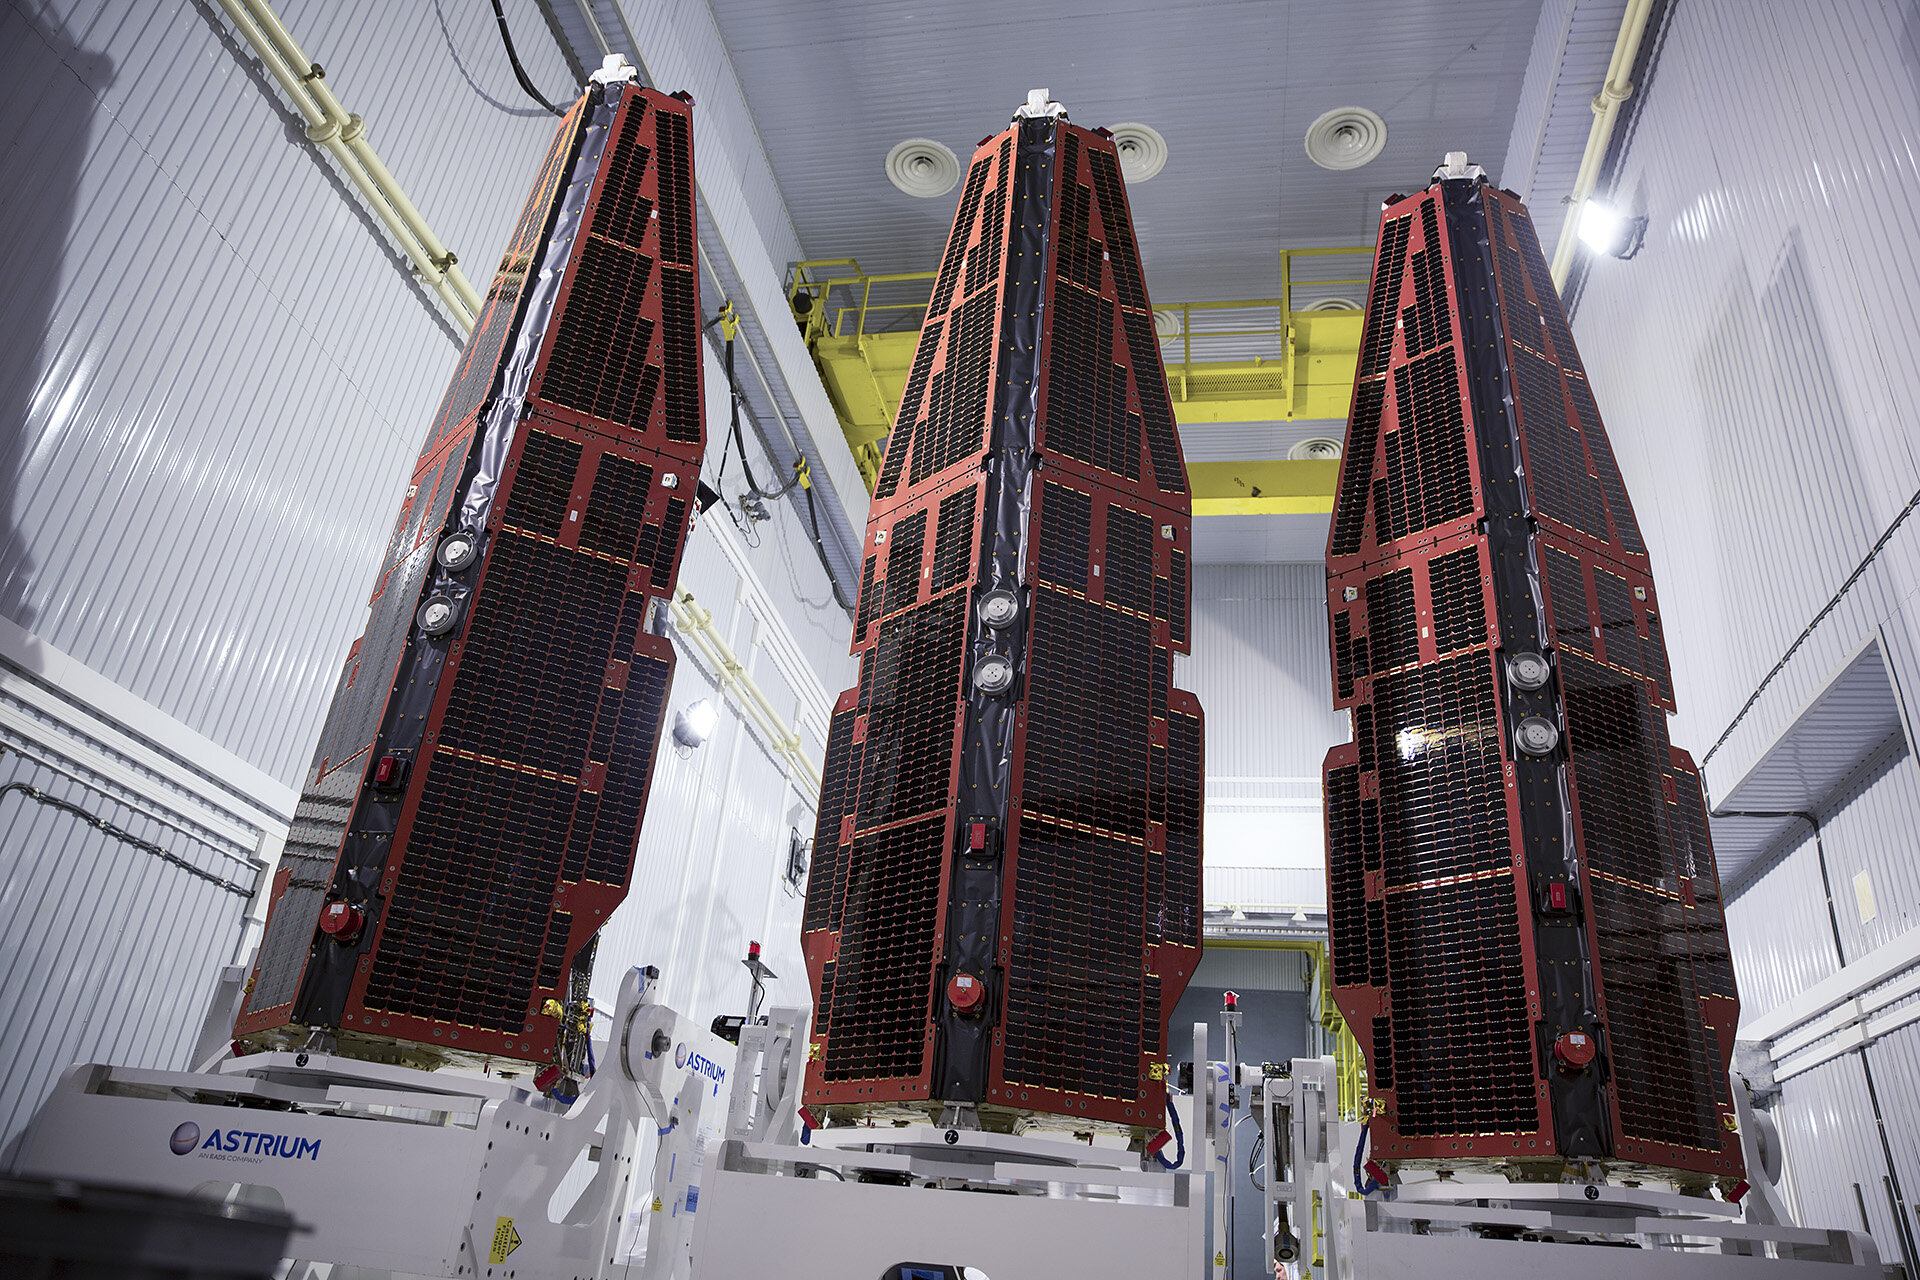 The three Swarm satellites during testing